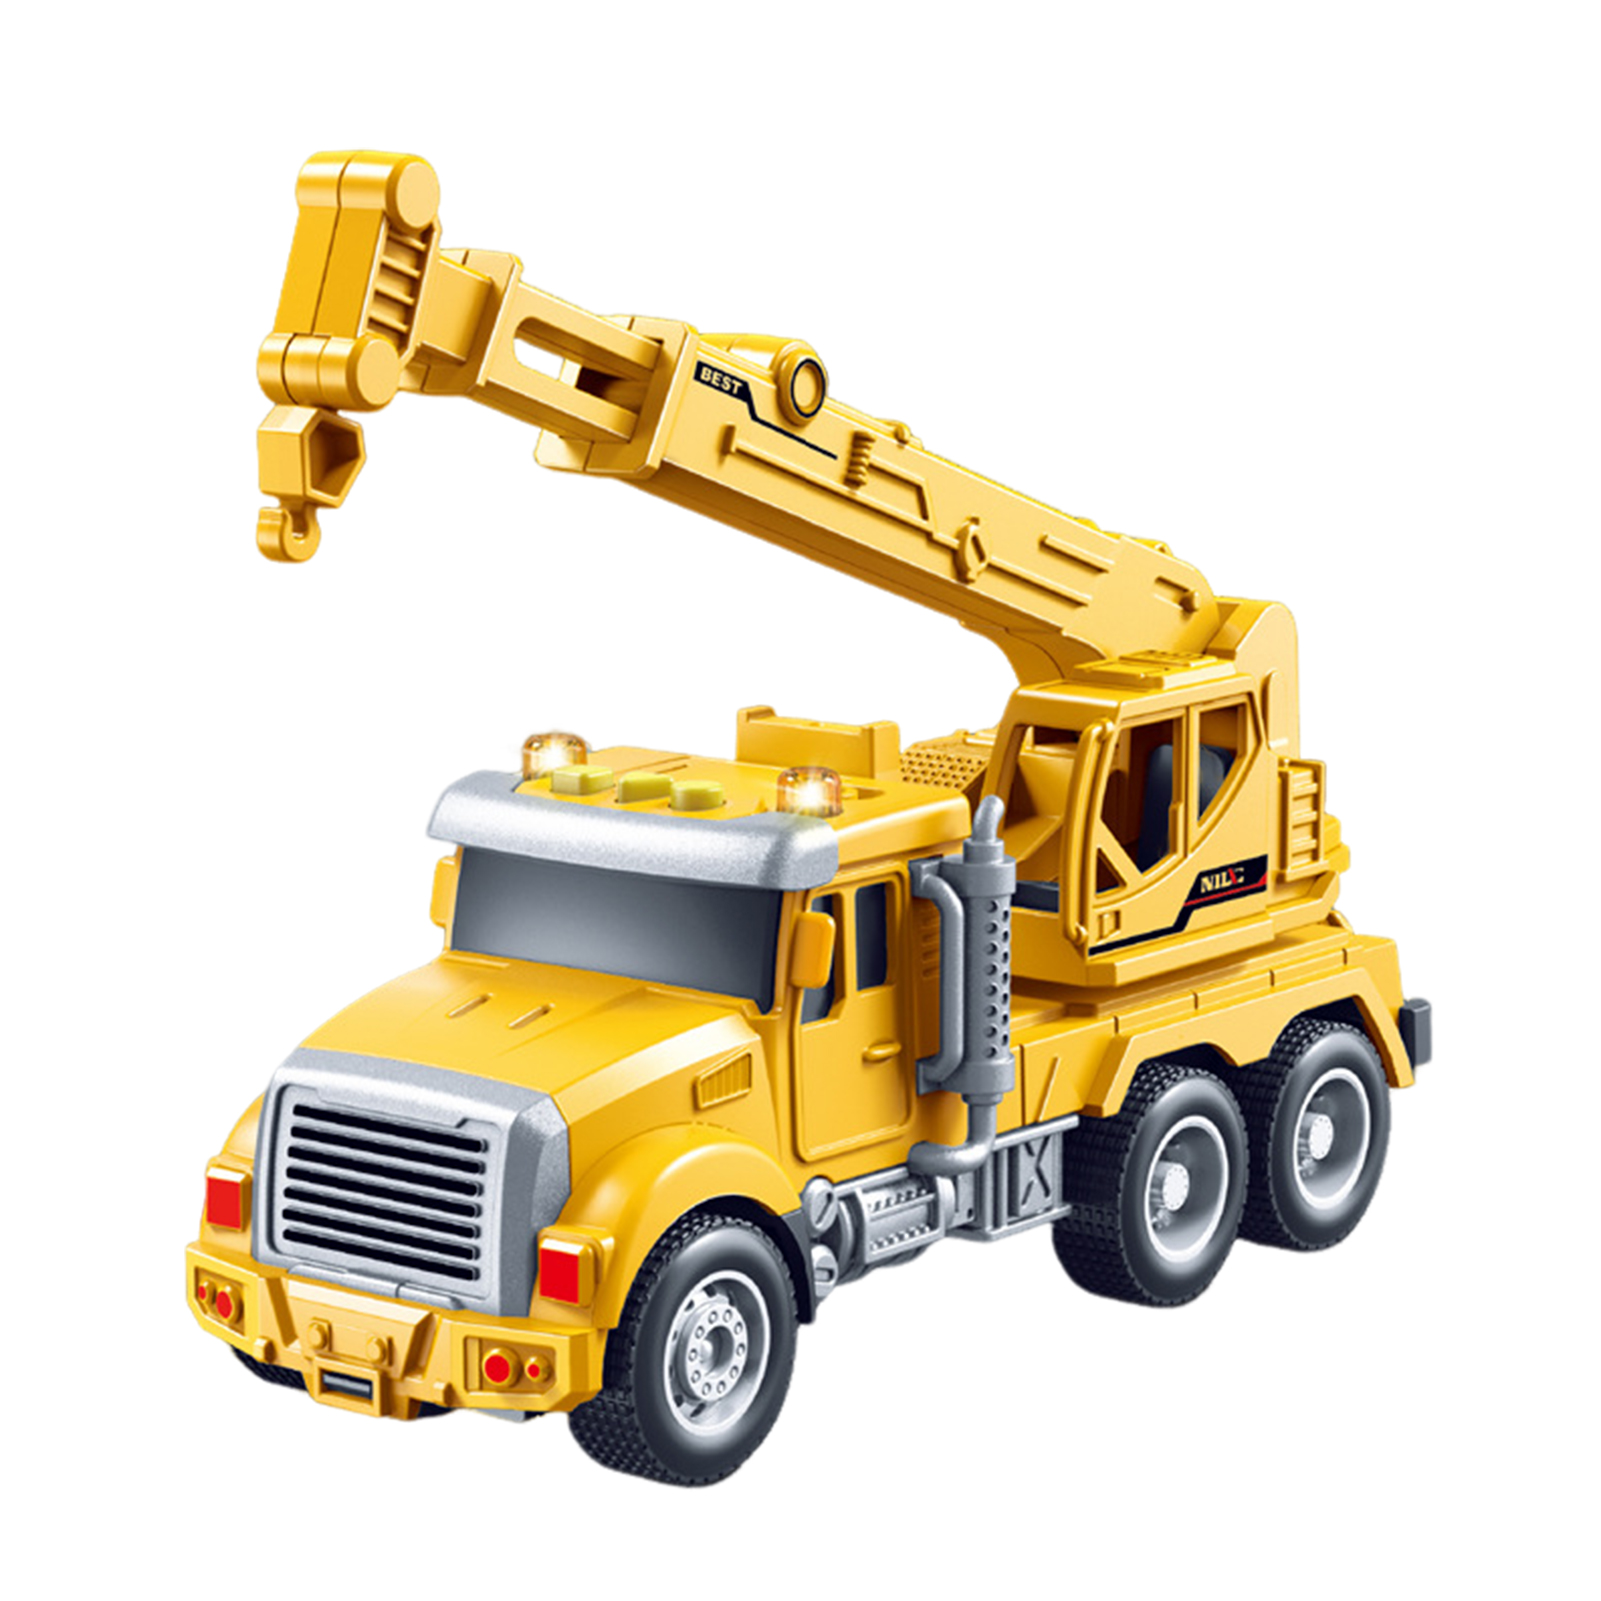 218s Truck Model Toy Sprinkler Truck Model Interactive Construction Truck